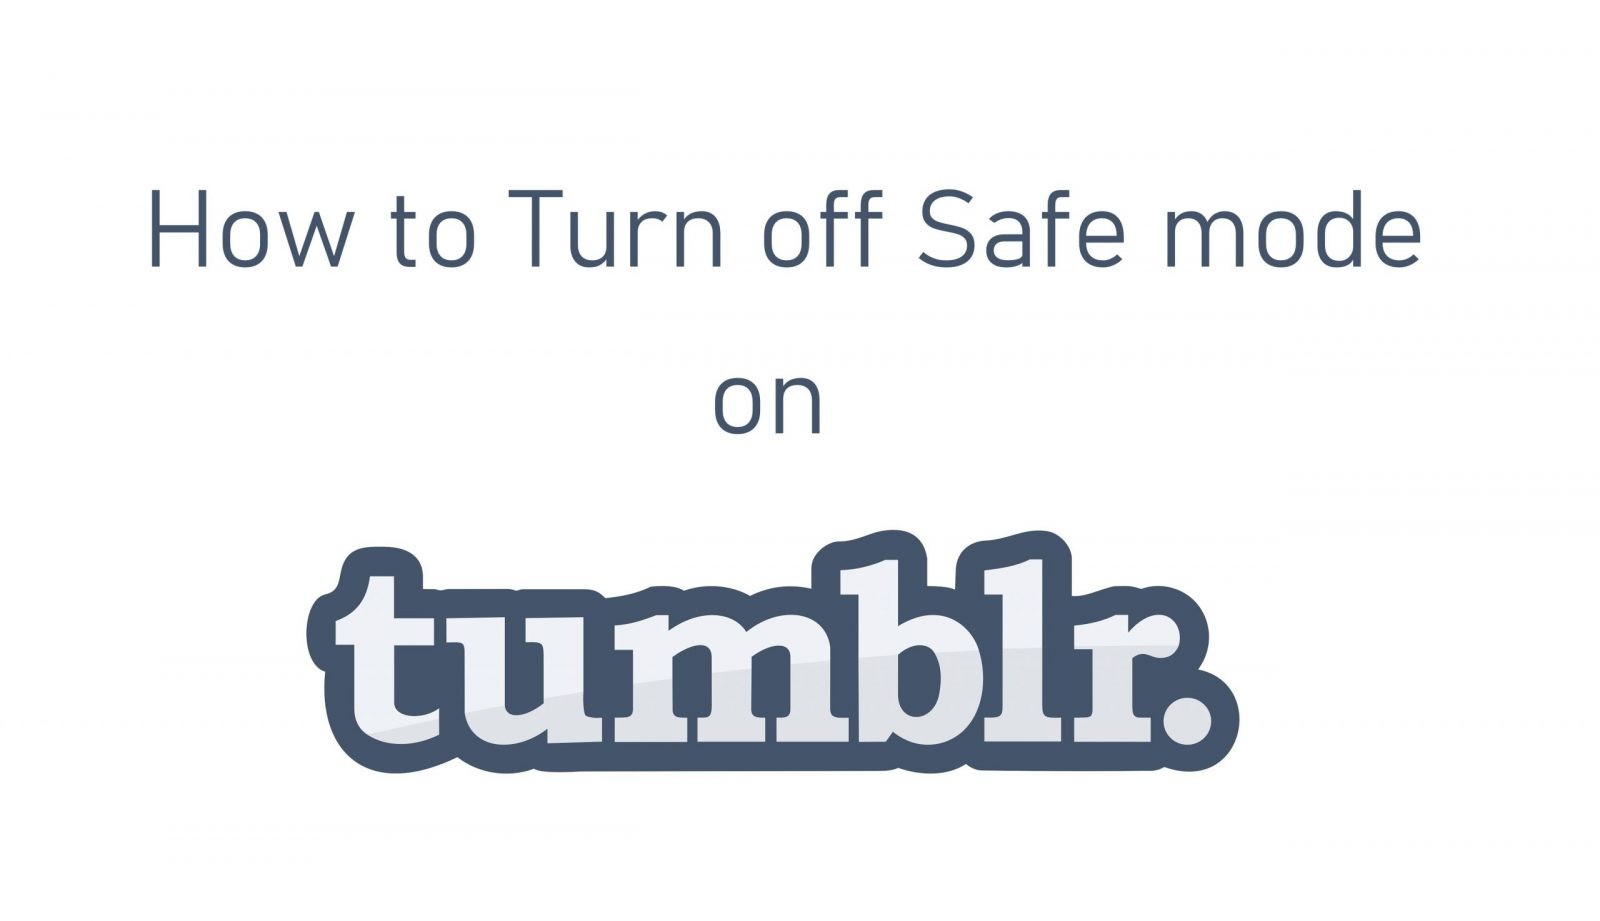 Tumbler turn off safe mode